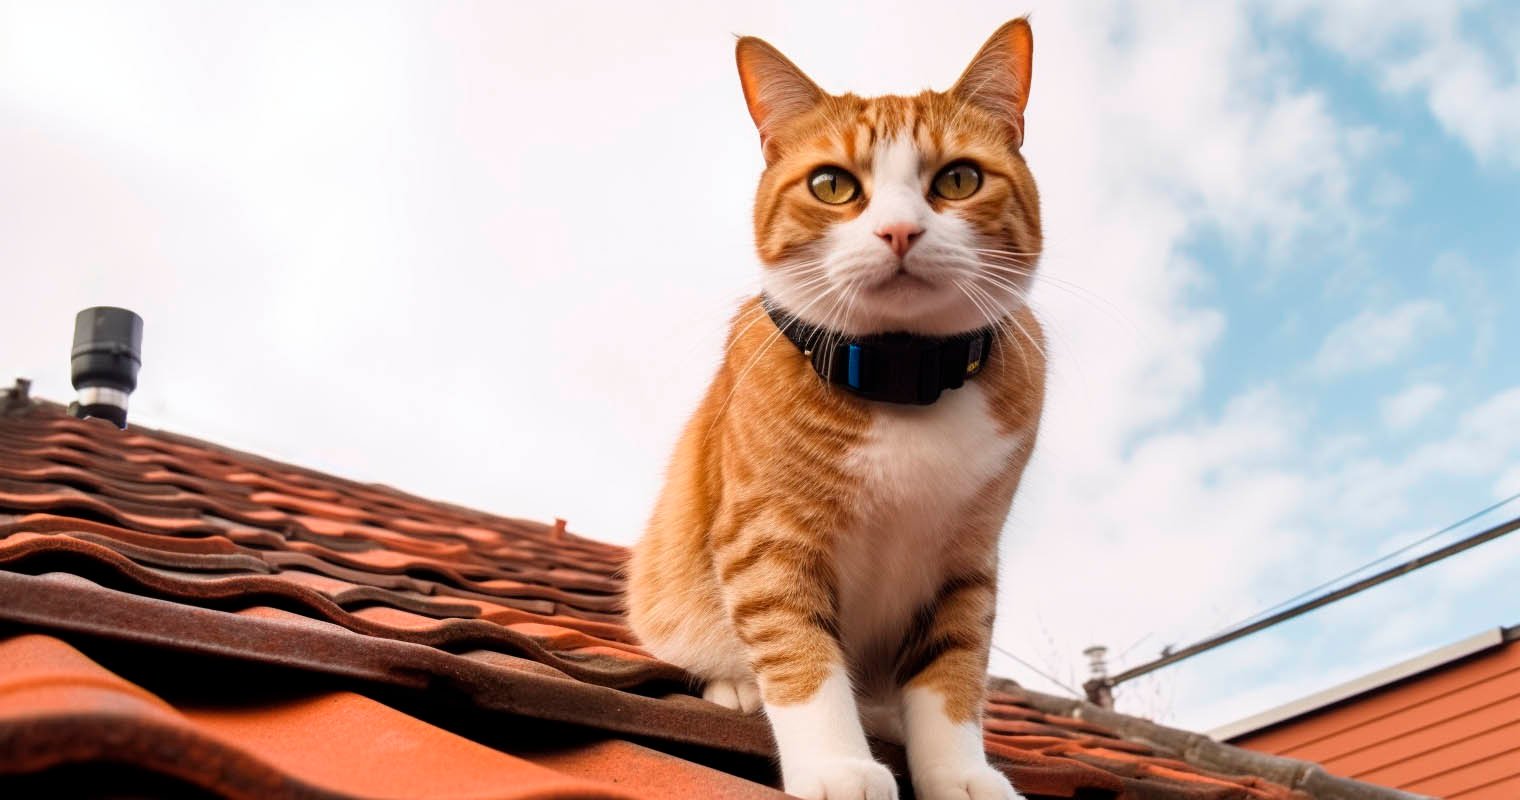 Action Cameras Turn Adventurous Cats Into Viral Sensations